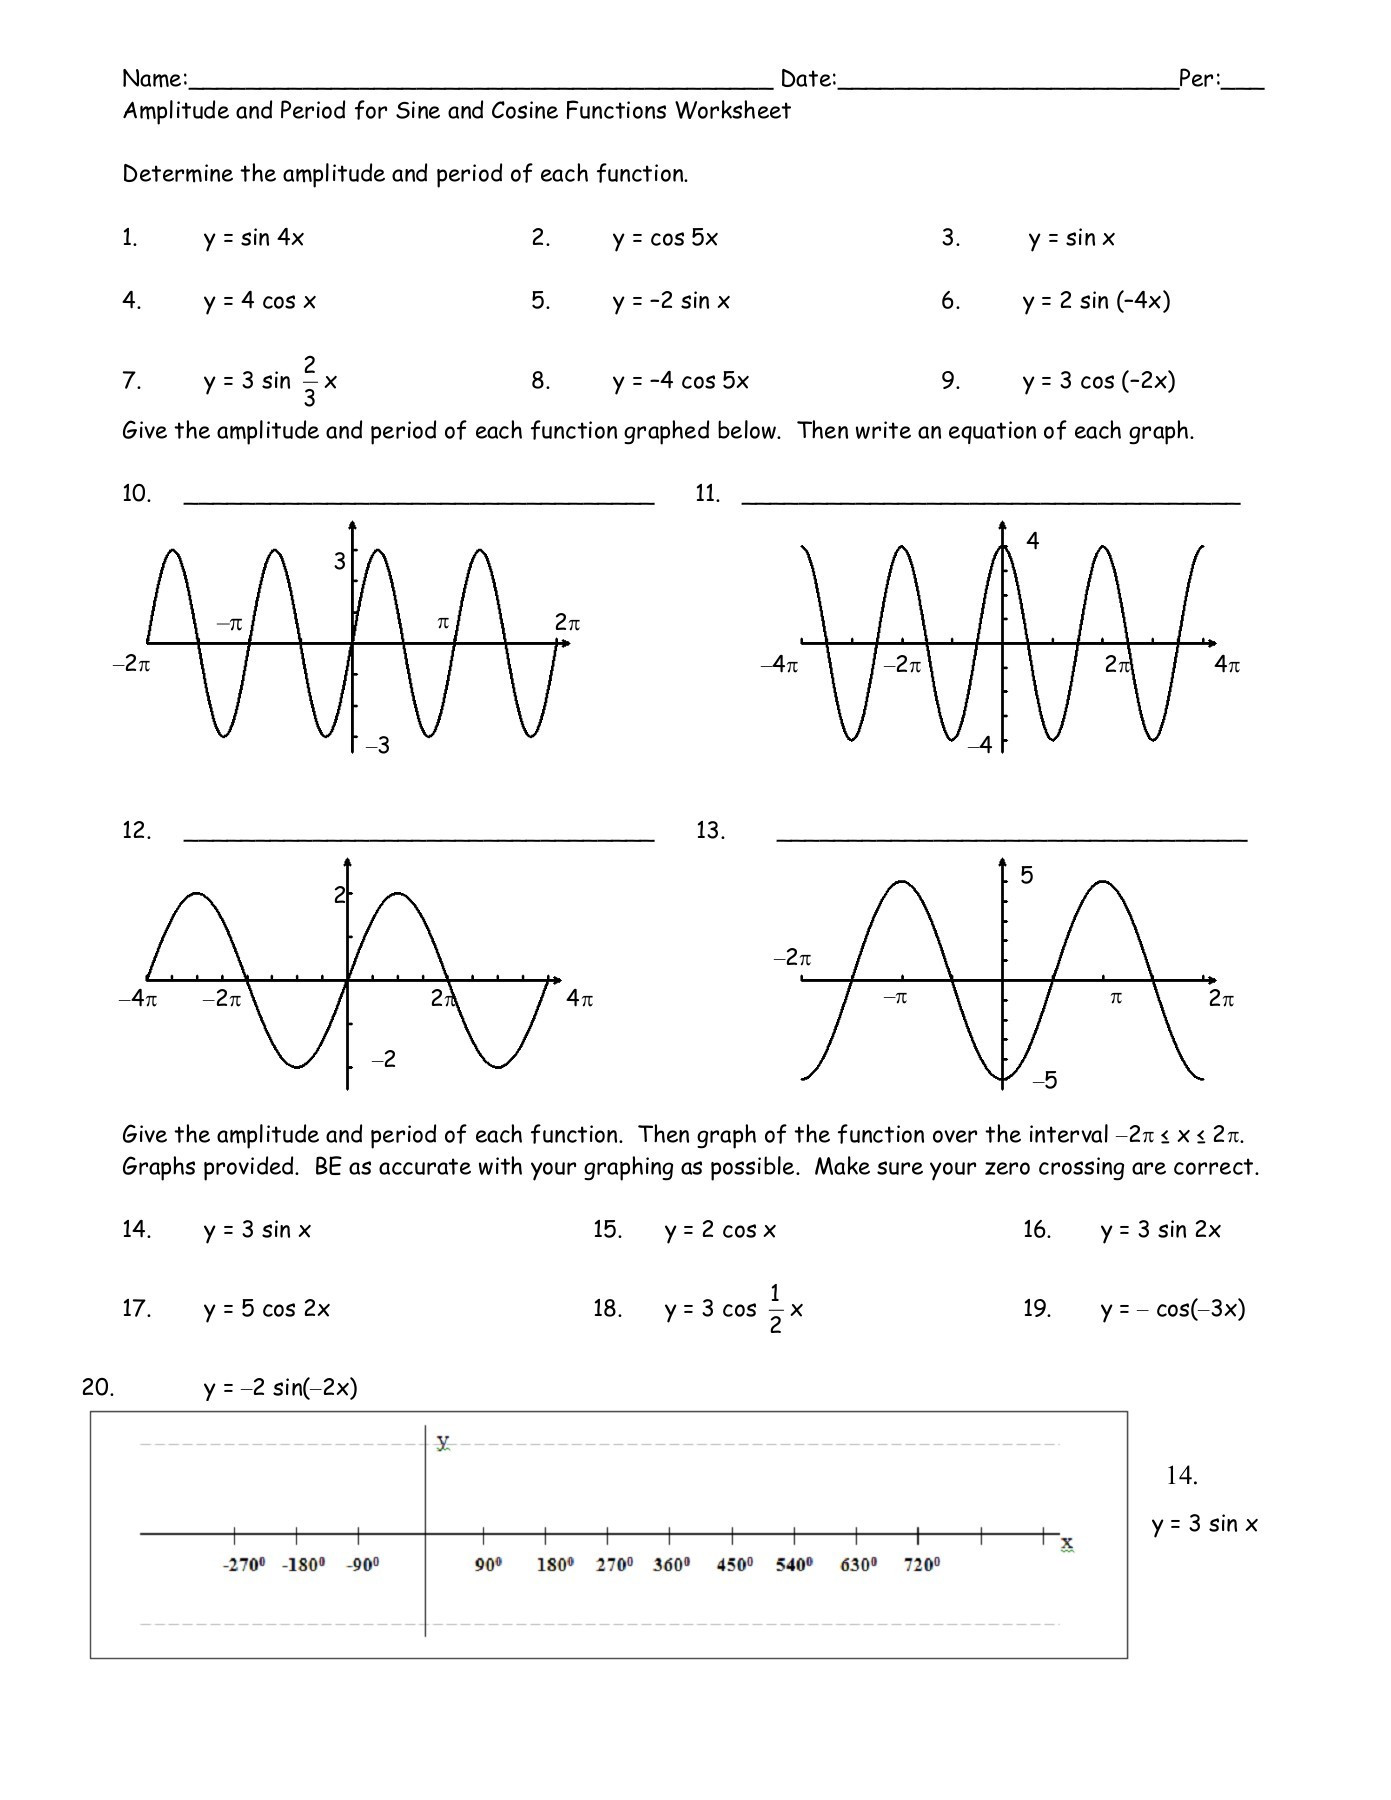 Parent Function Worksheet Answers Amplitude and Period for Sine and Cosine Functions Worksheet